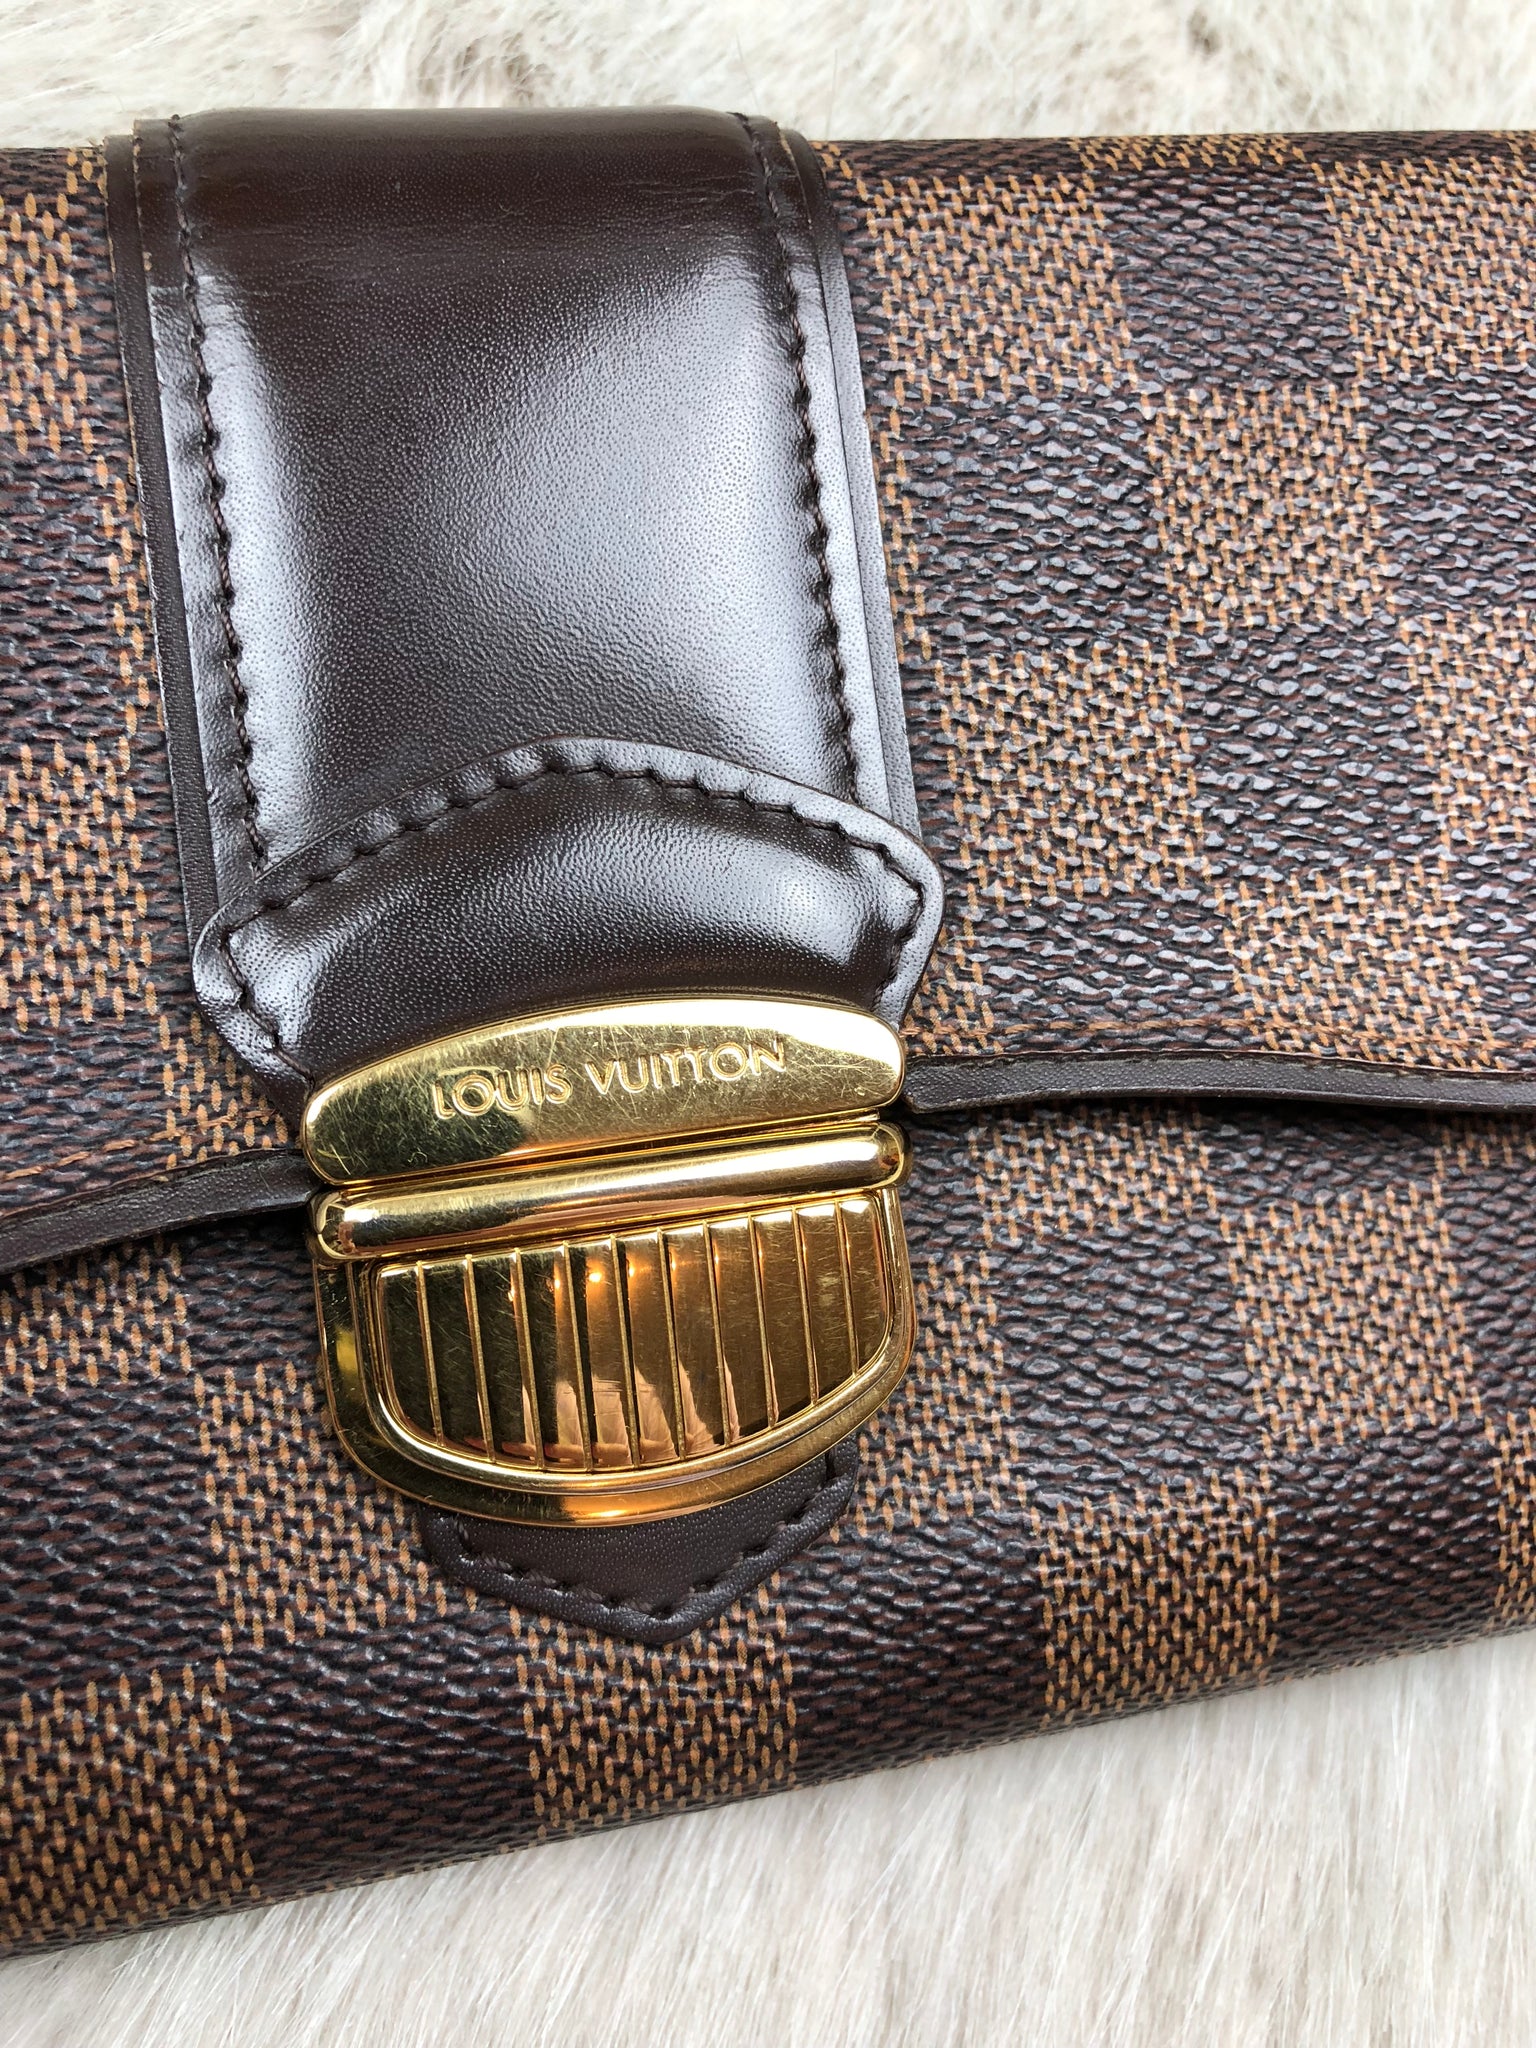 Gorgeous Authentic Louis Vuitton Damier Ebene Sistina Long Wallet